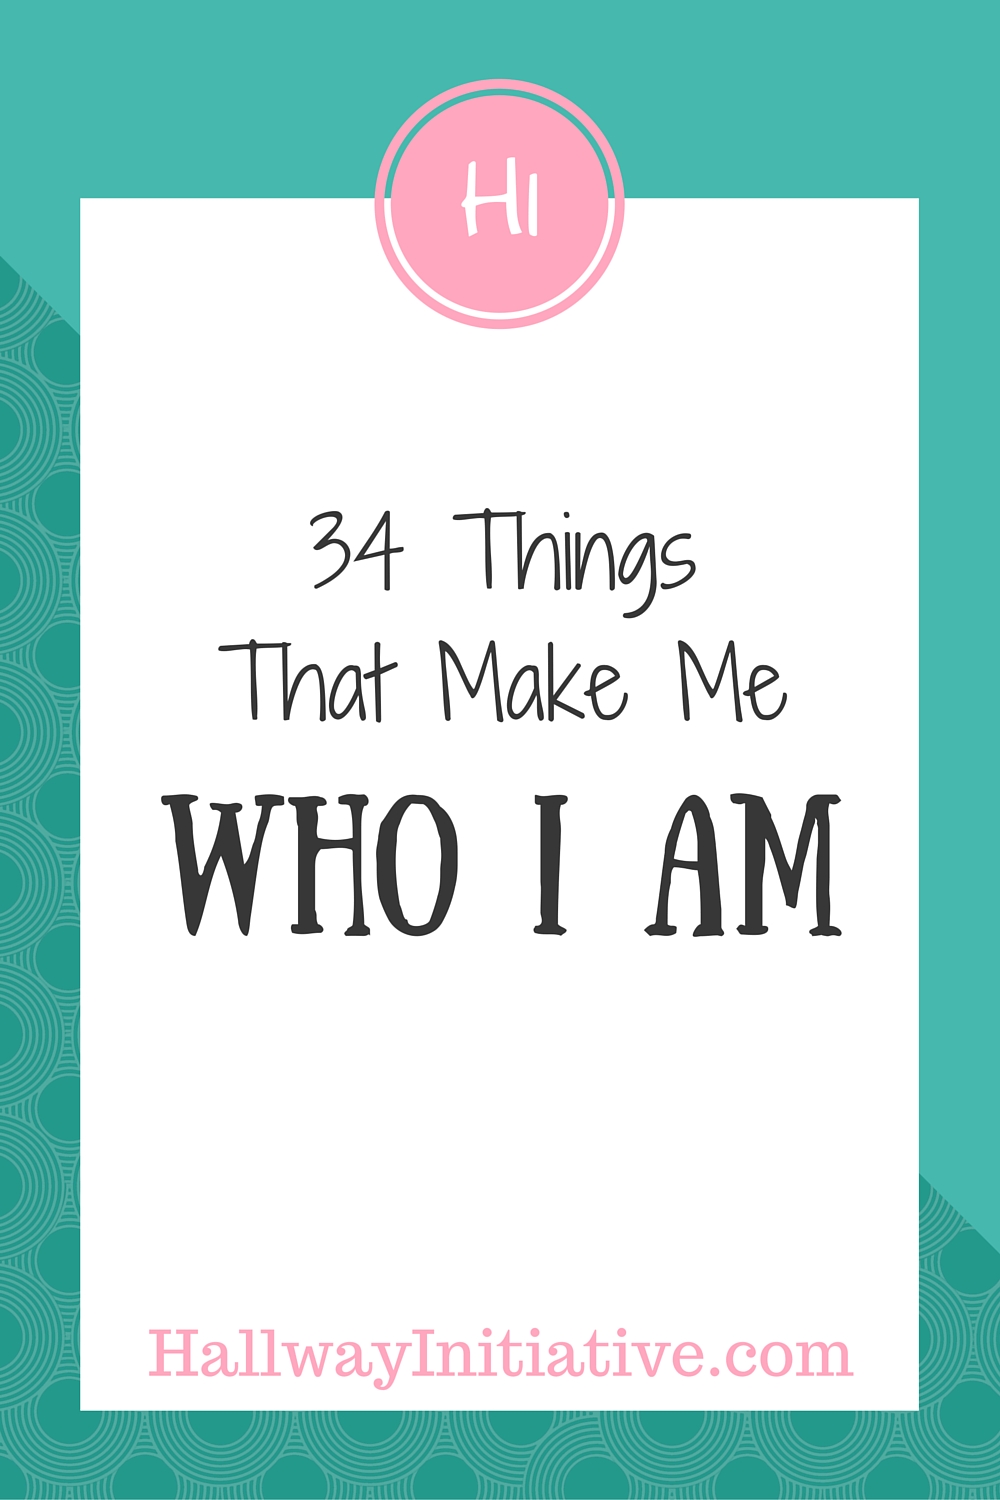 34 things that make me who I am